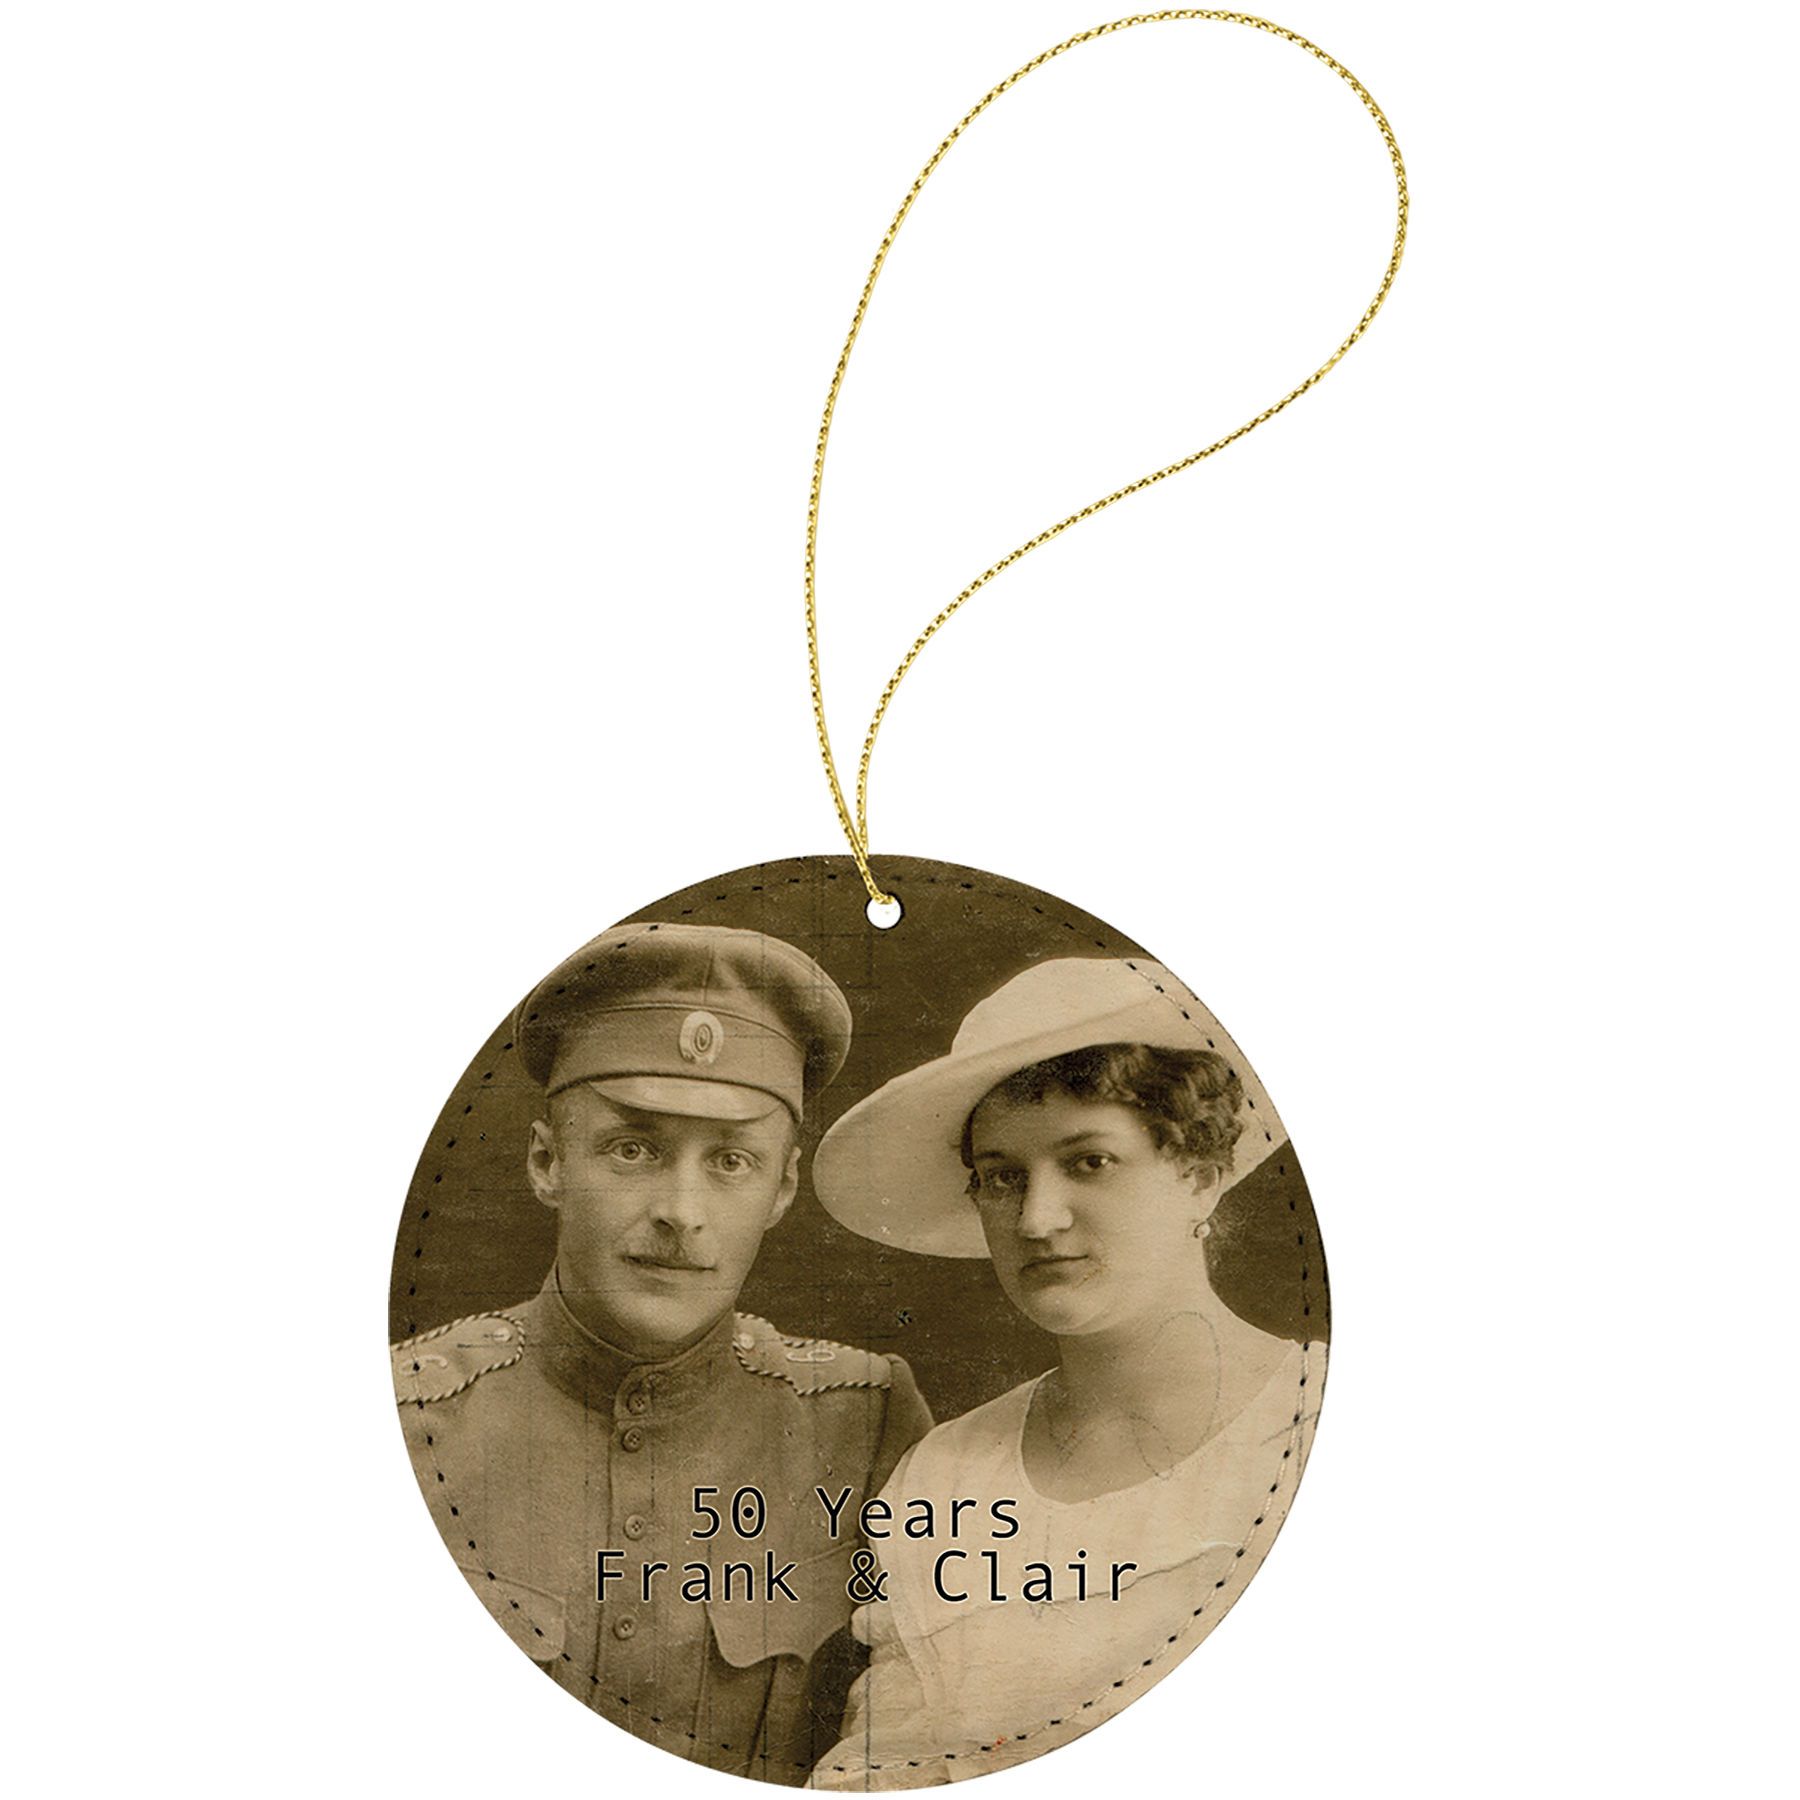 Subli-Tru Round Ornament with Gold String - Craftworks NW, LLC